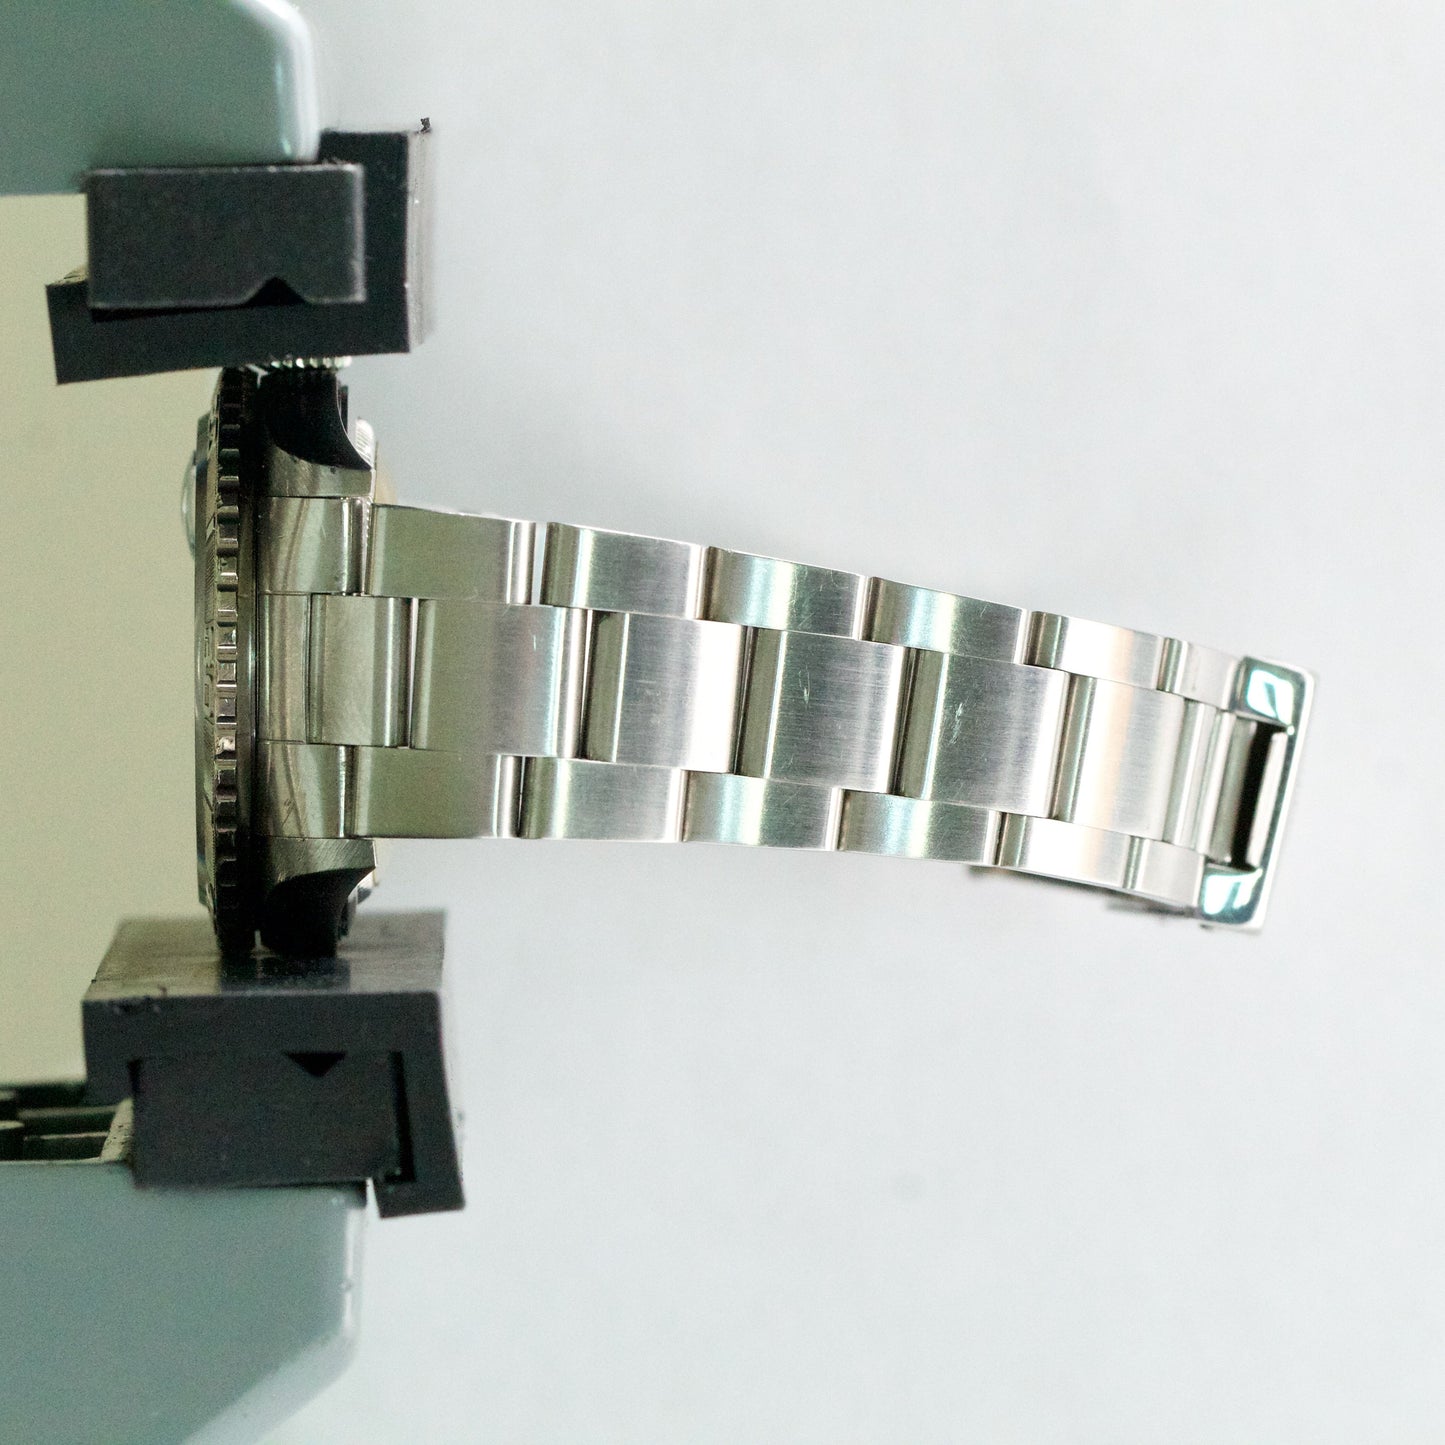 UNPOL. Rolex DateJust 36mm Turn-O-Graph Silver Roman Stainless Watch 16264 B&P